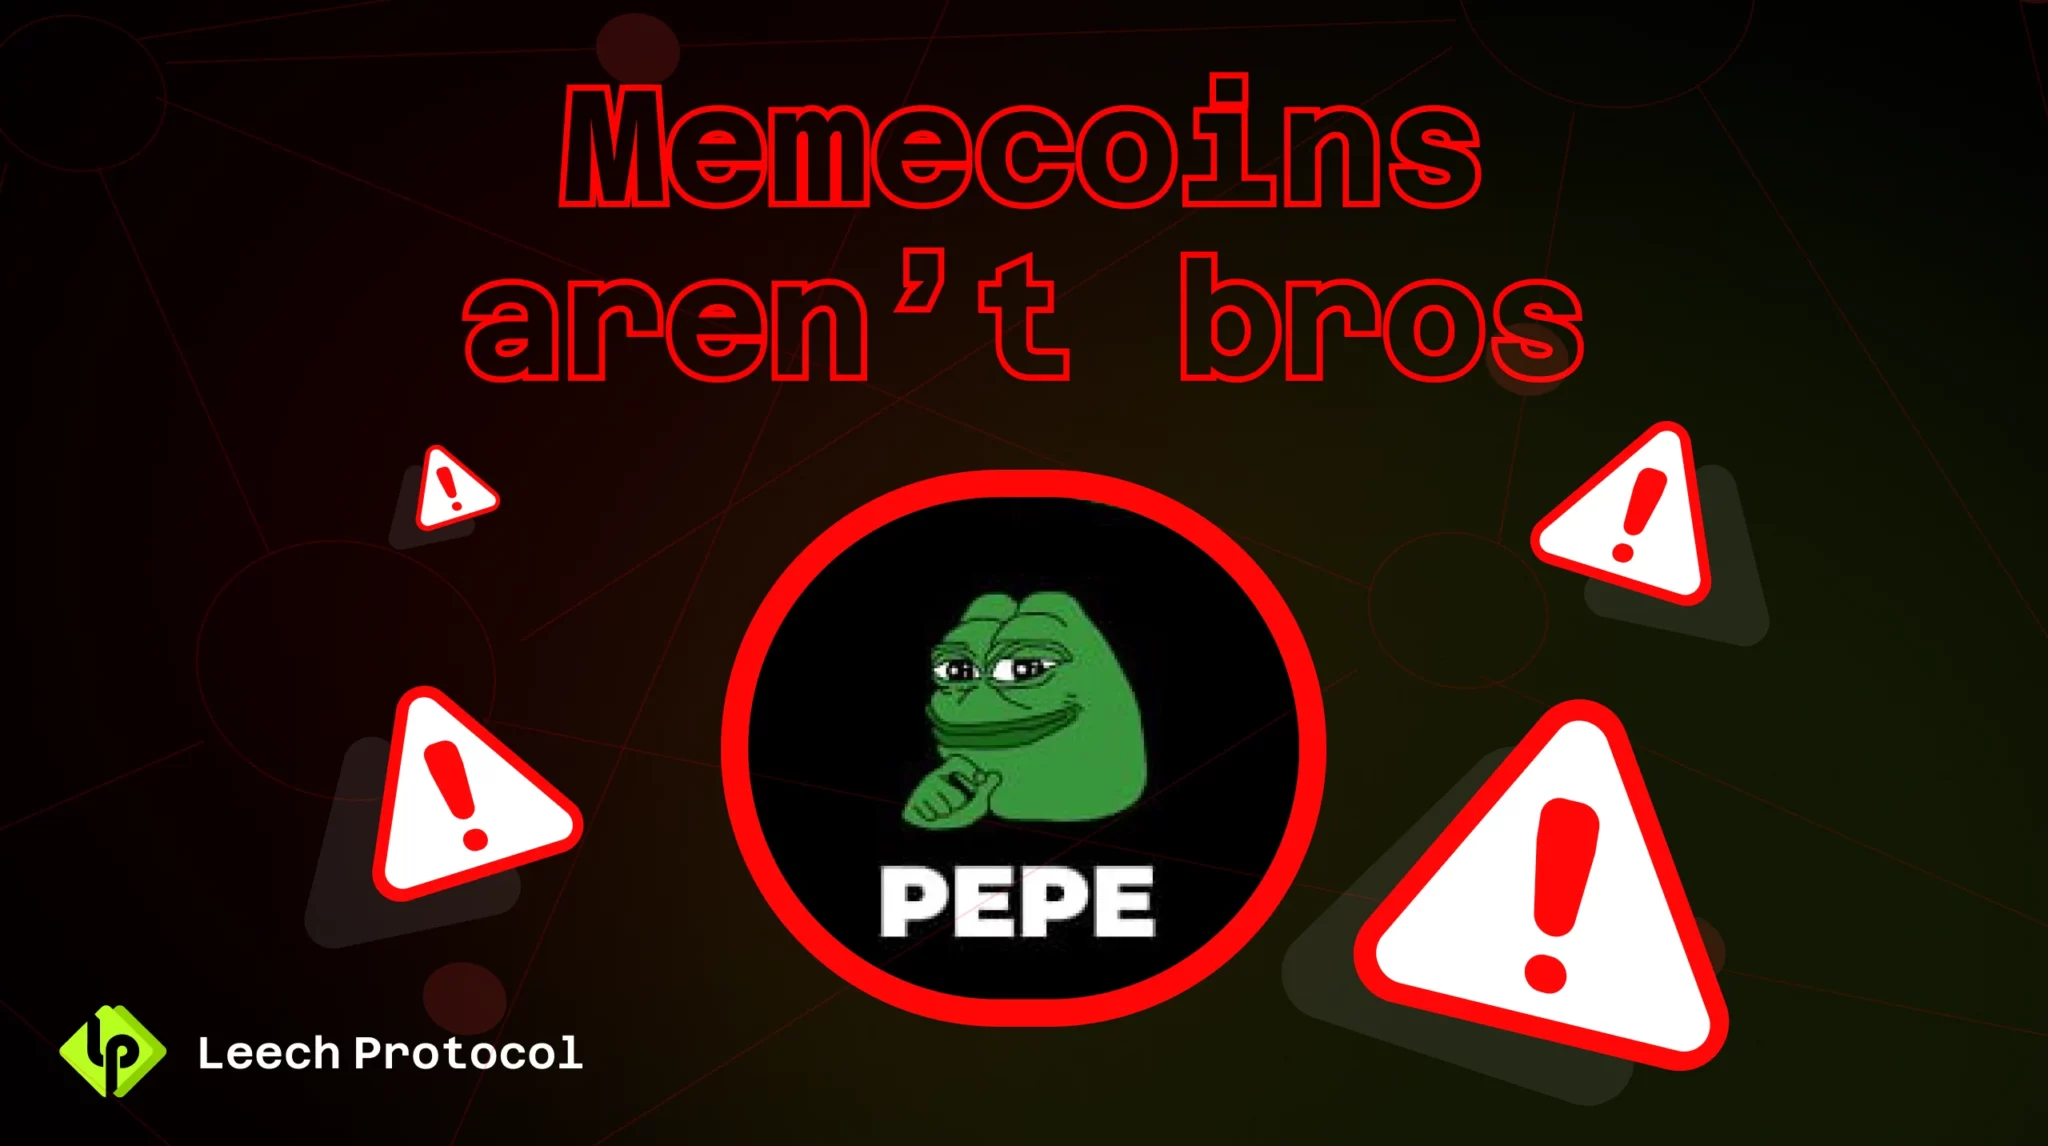 Memcoins aren’t bros?